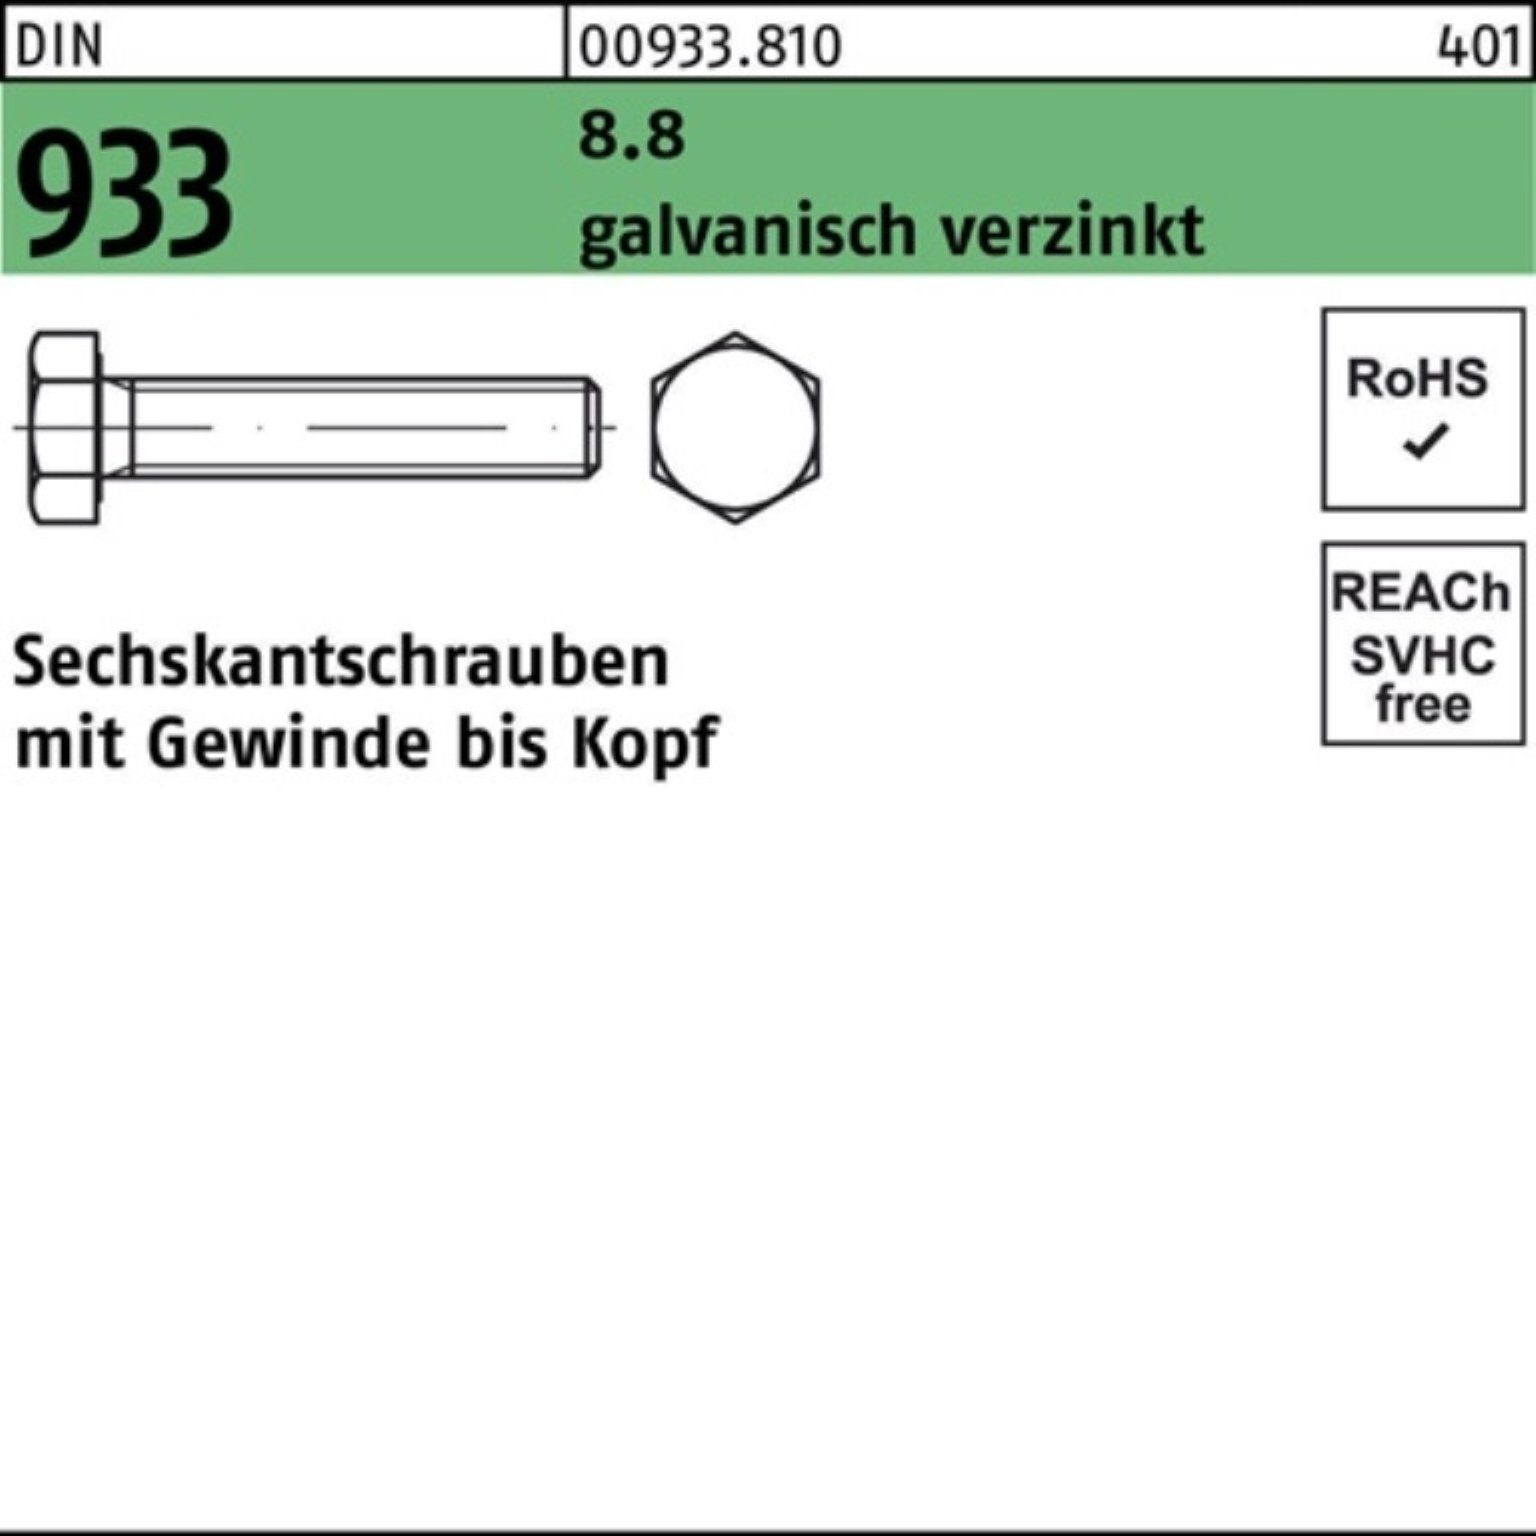 Reyher Sechskantschraube 100er Pack 933 1 Sechskantschraube 8.8 Stü VG DIN galv.verz. M39x 110